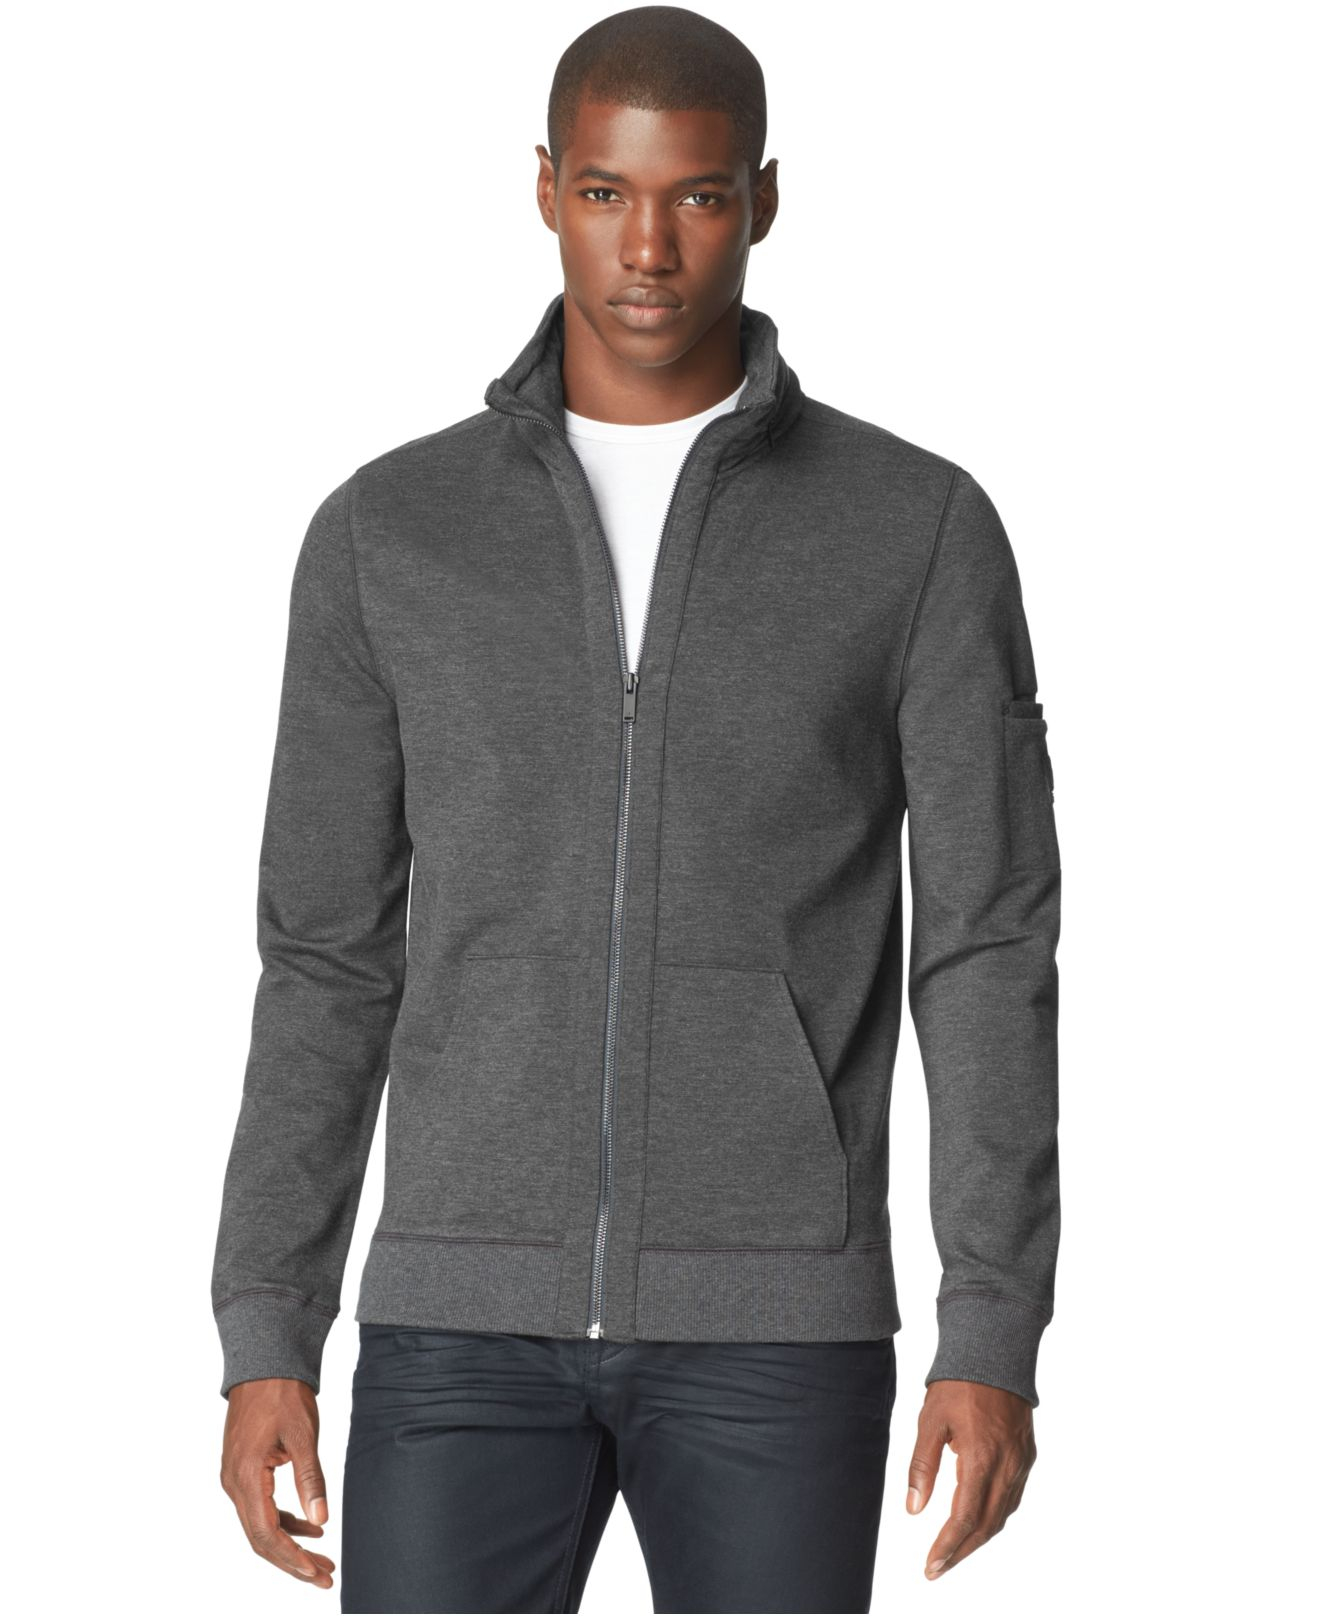 Lyst - Calvin Klein Jeans Zip-Up Sweater in Gray for Men